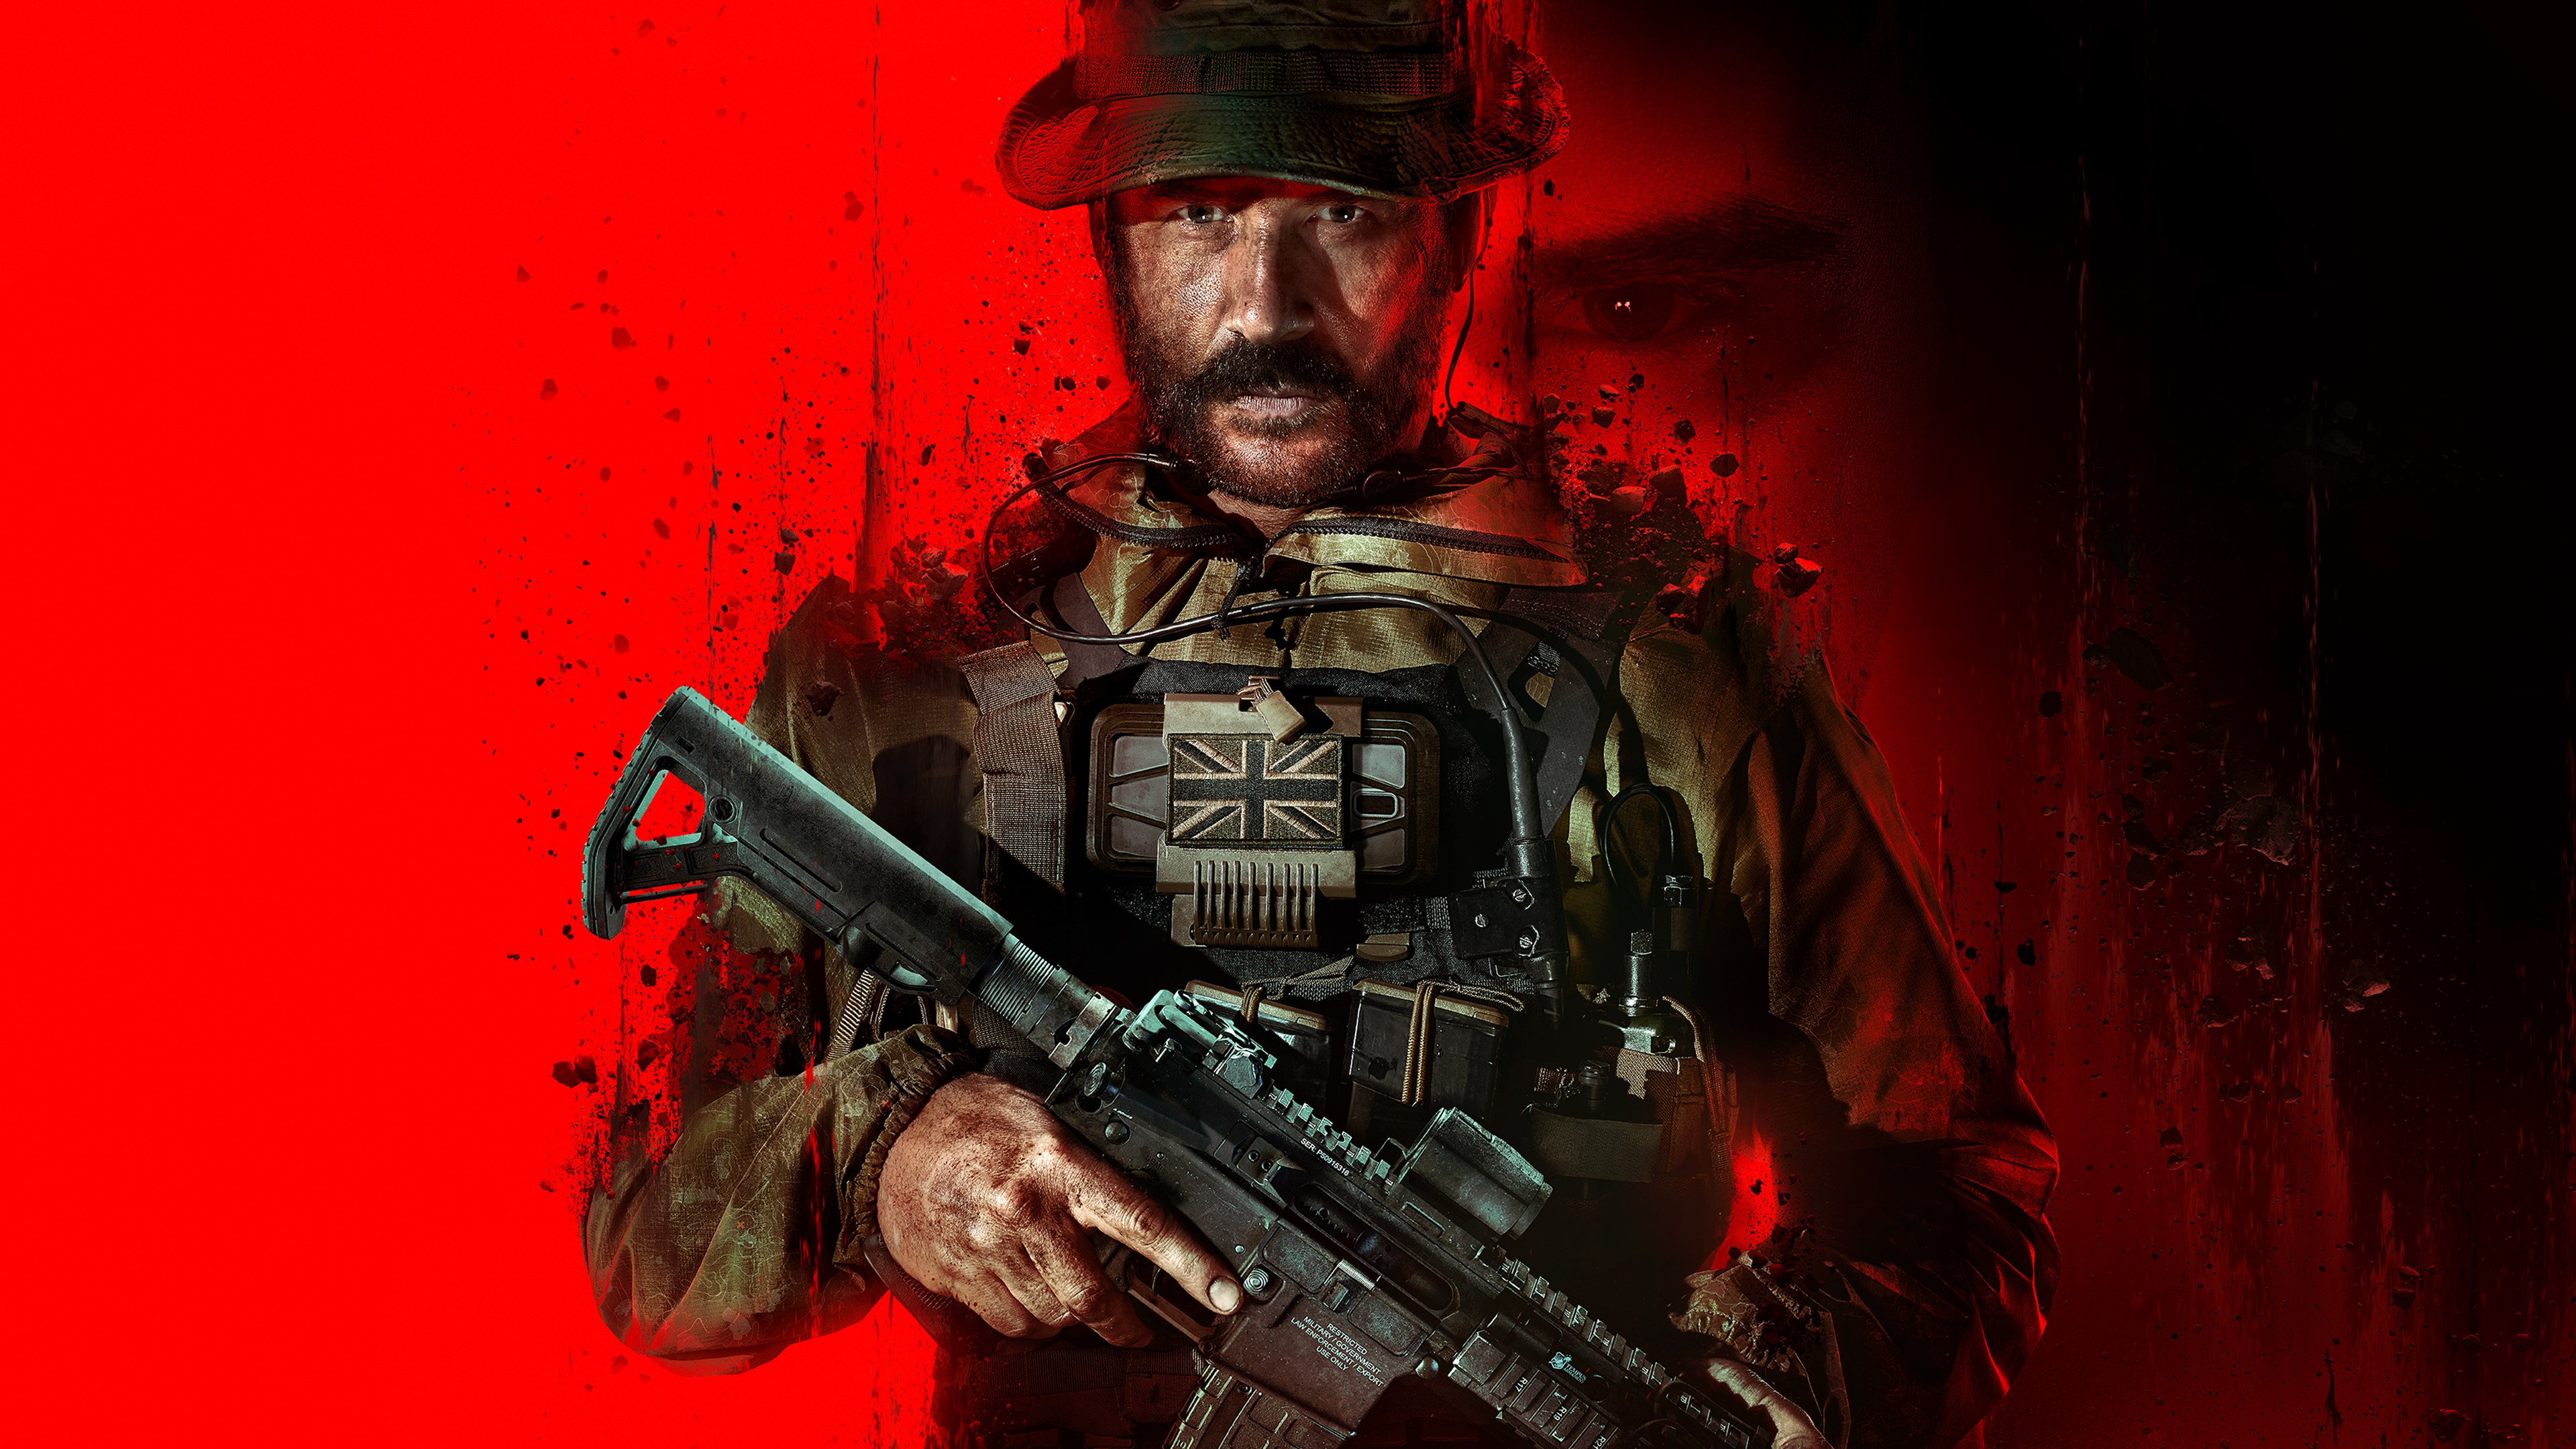 Call Of Duty: Modern Warfare III - Vault Edition Upgrade DLC Steam Altergift